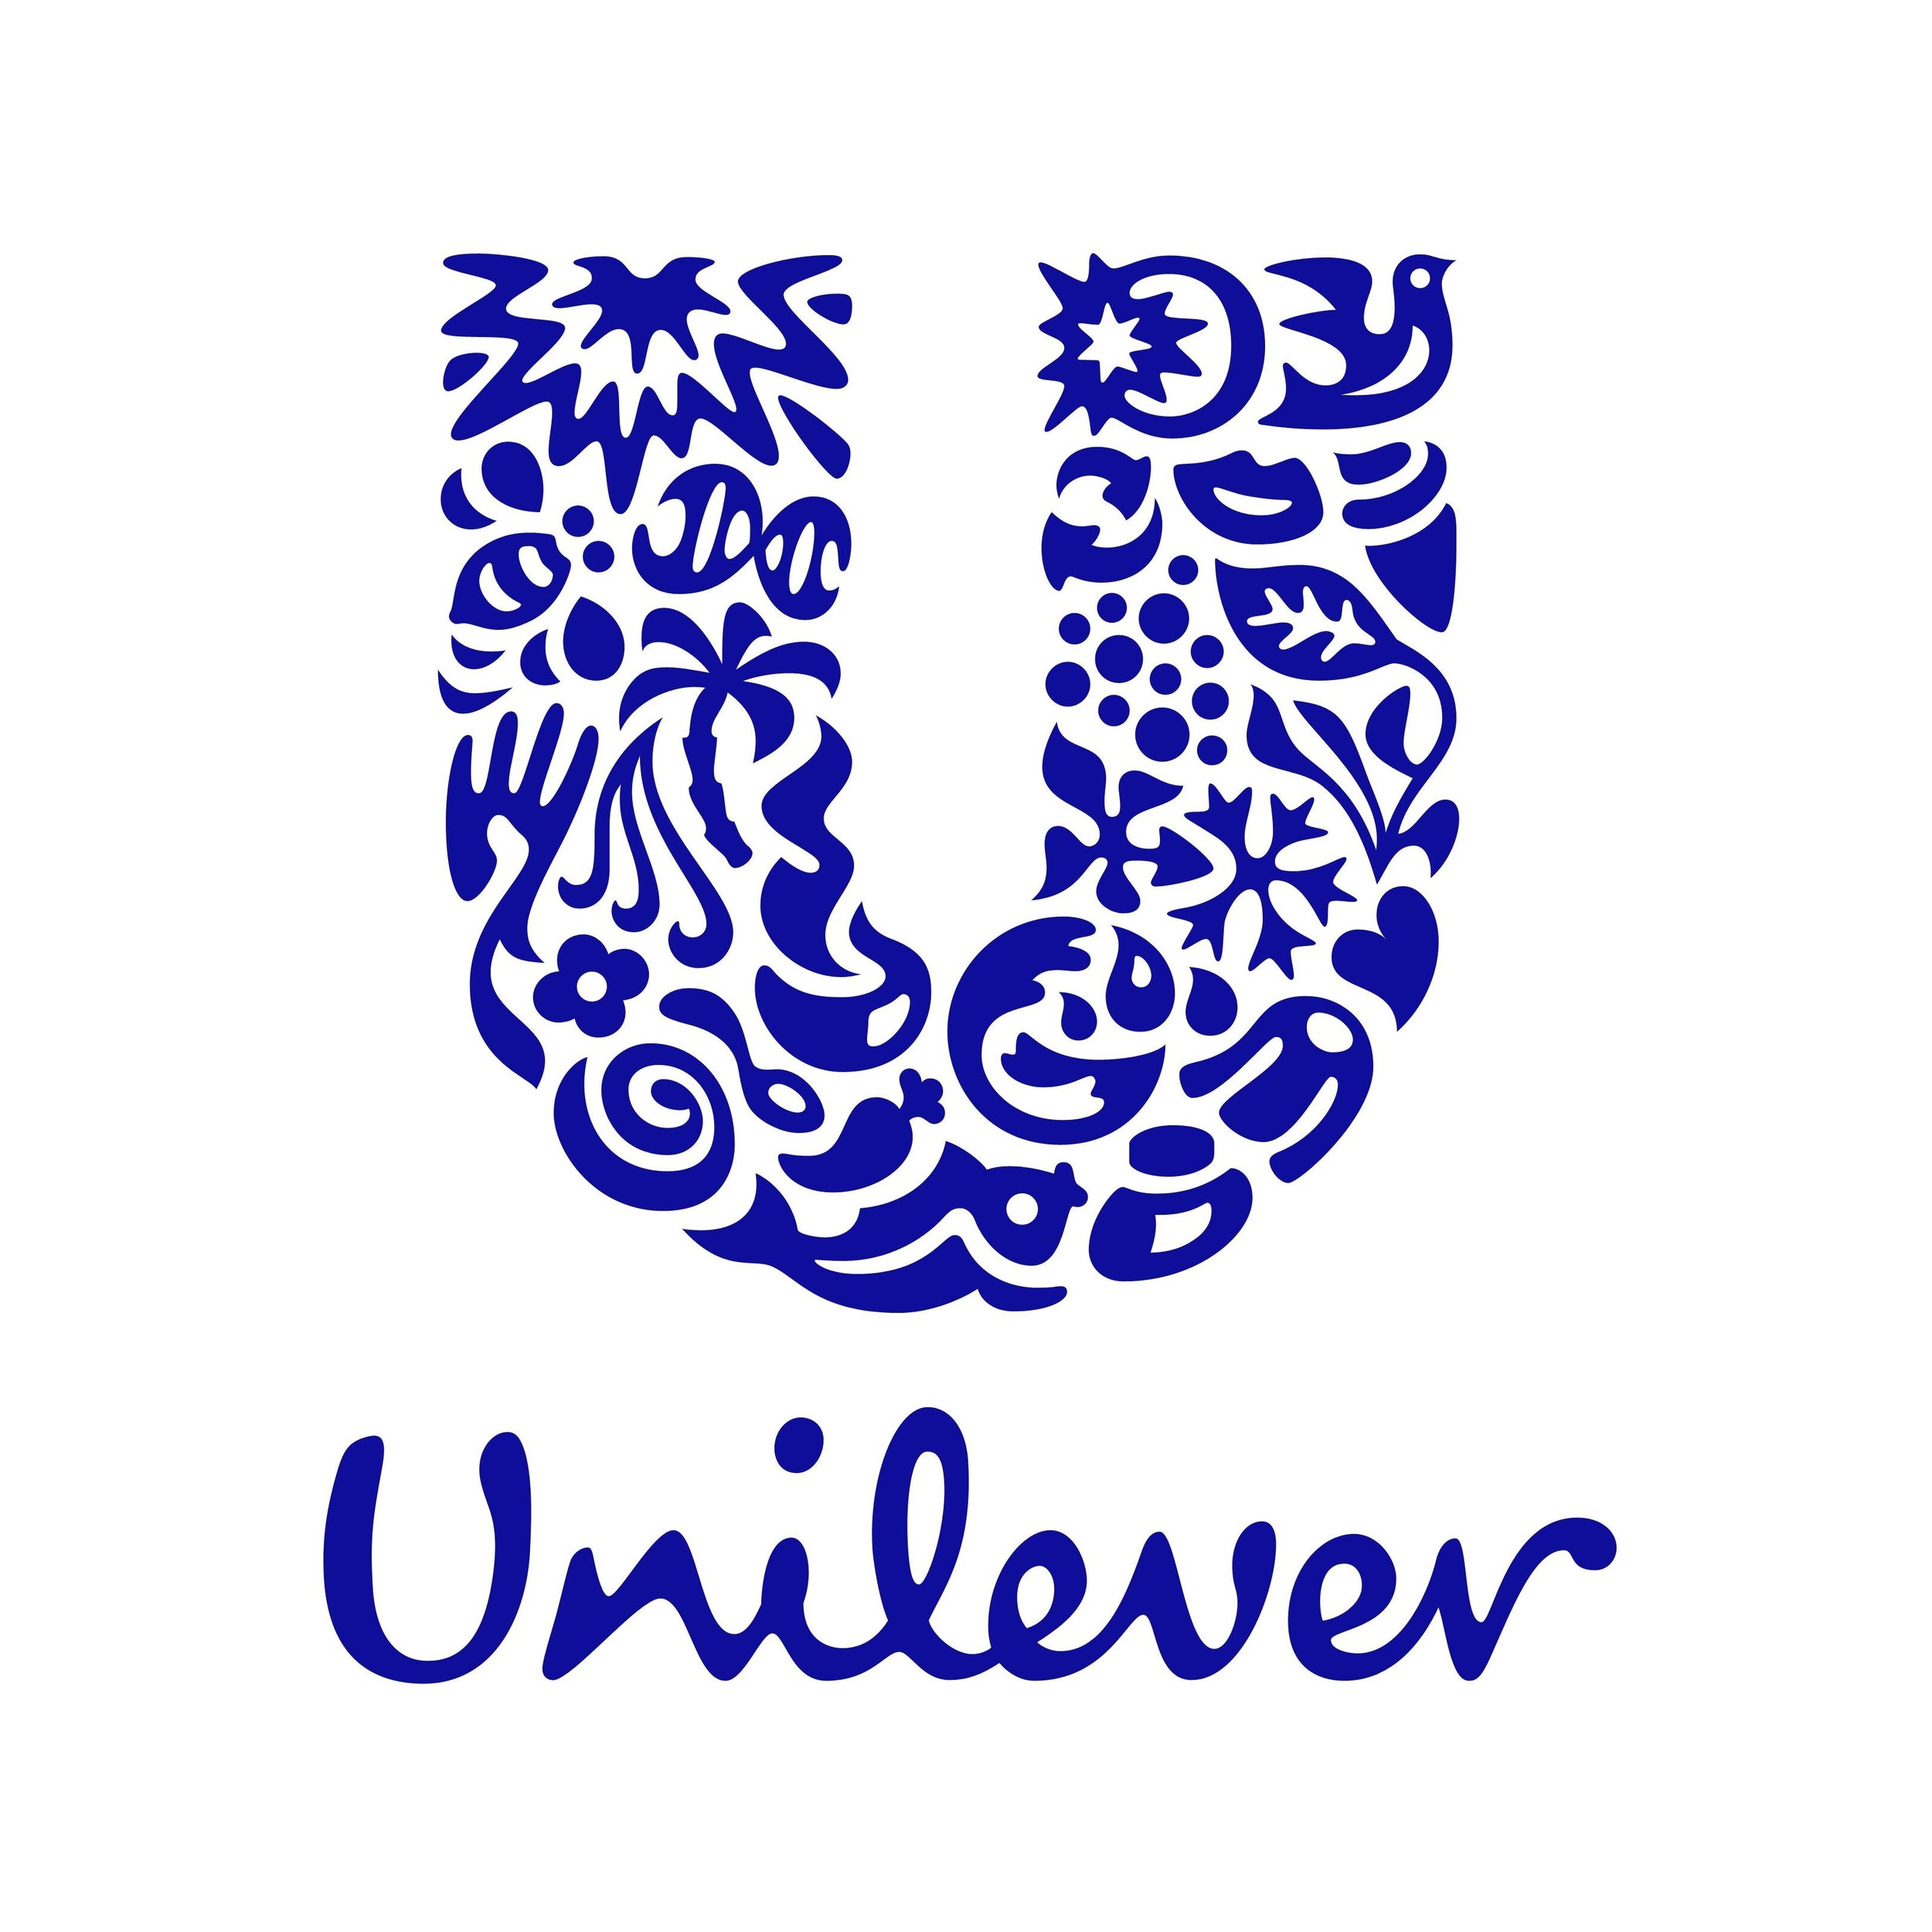 Unilever.jpeg